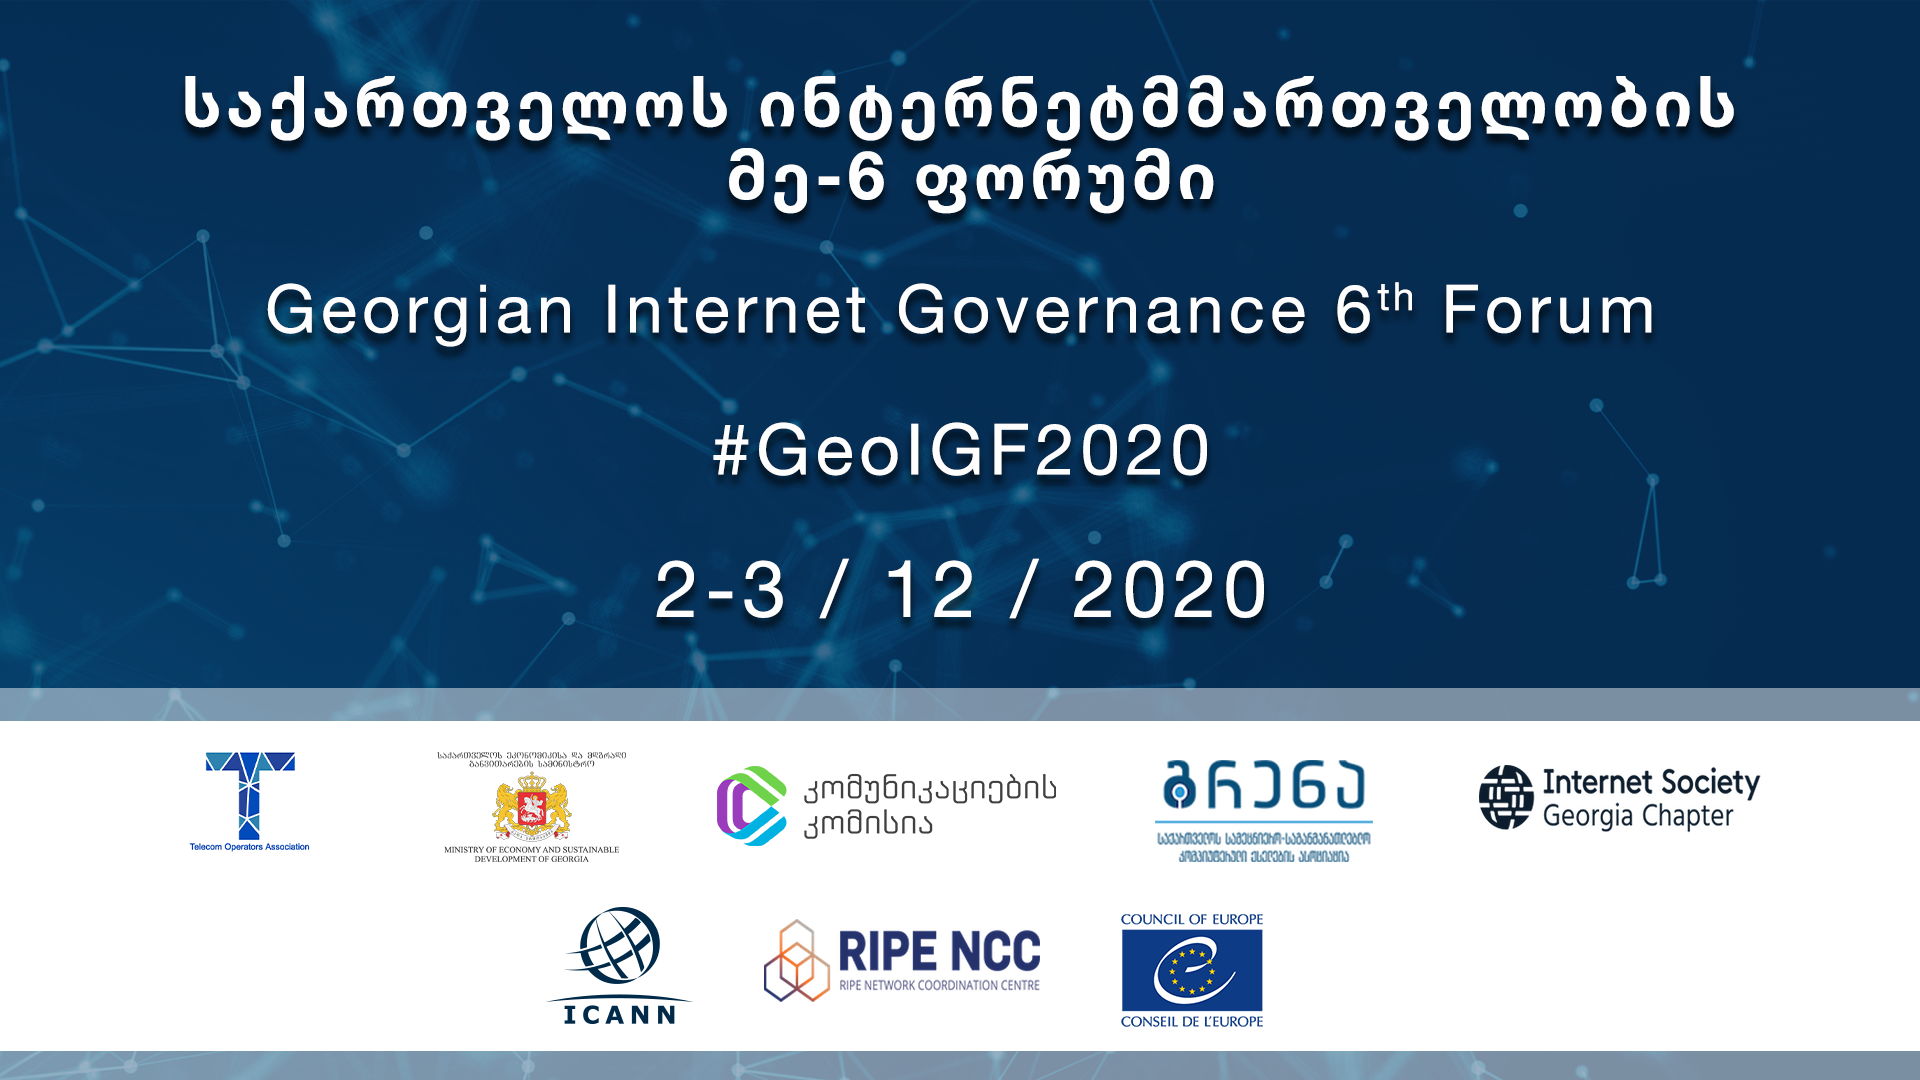 Internet Governance Forum #GeoIGF goes online